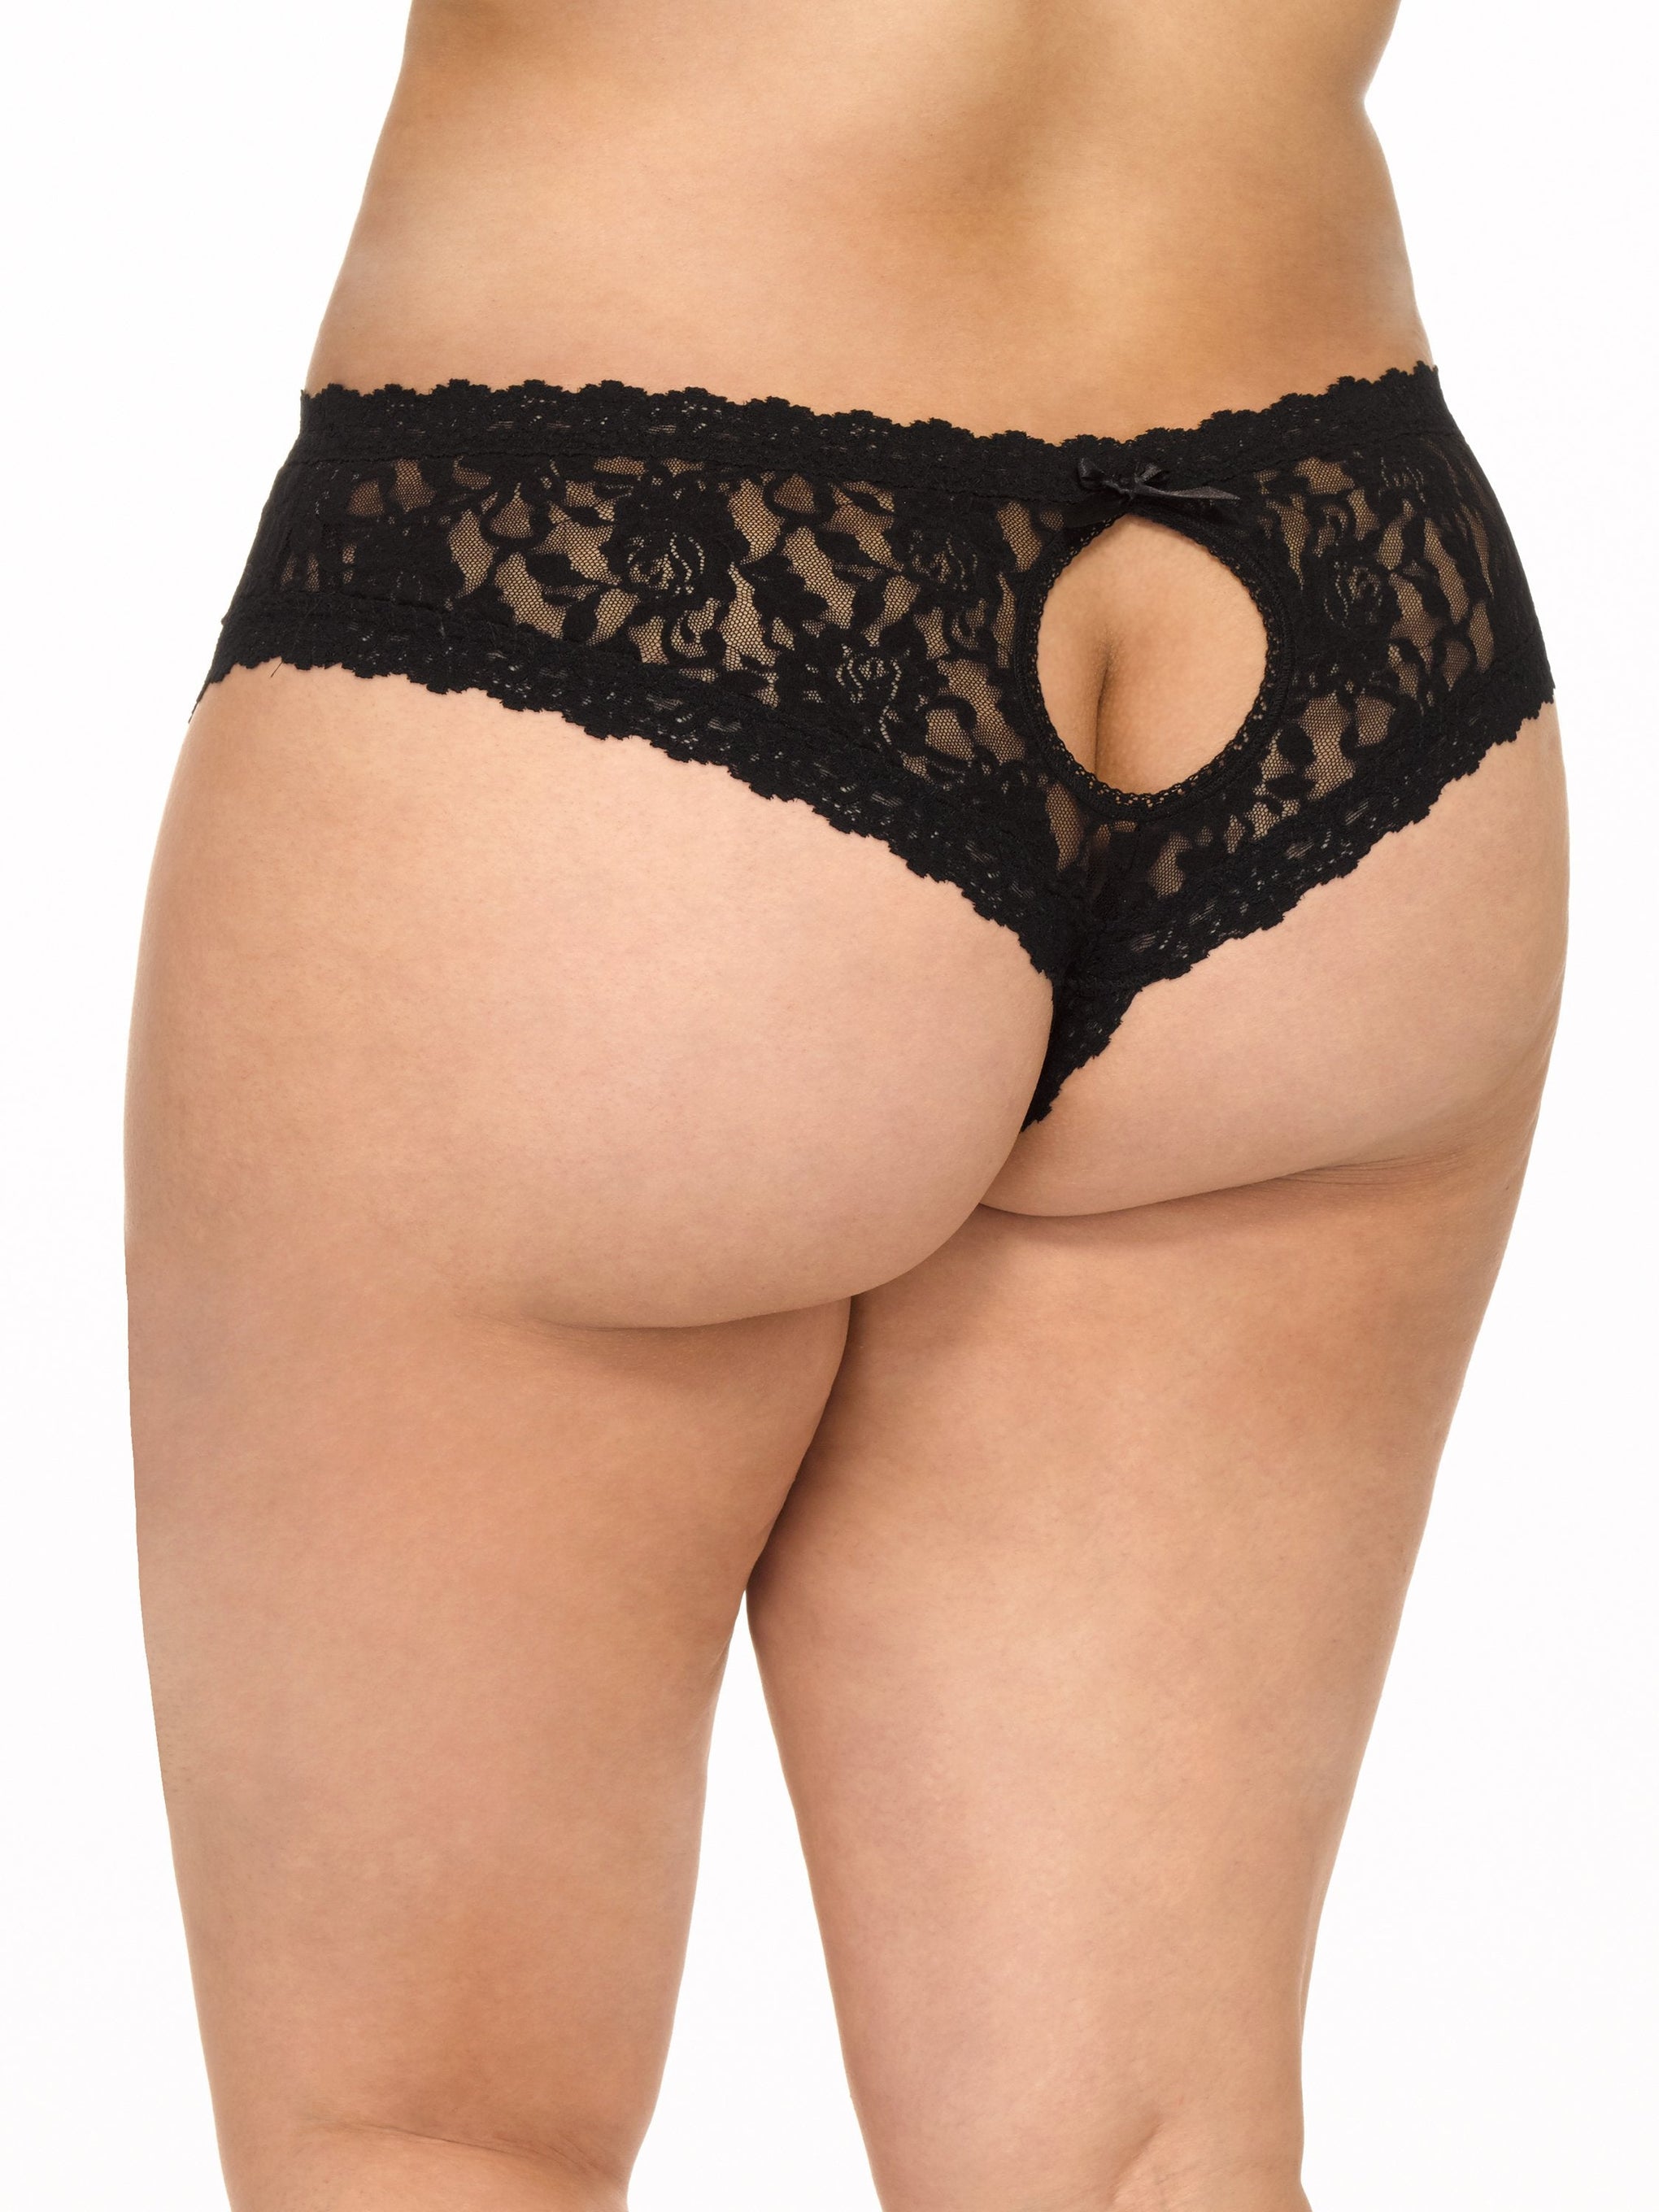 Black Lace Satin Top Bow Thong Boyshort Lingerie Underwear Panties G-String  M-3X